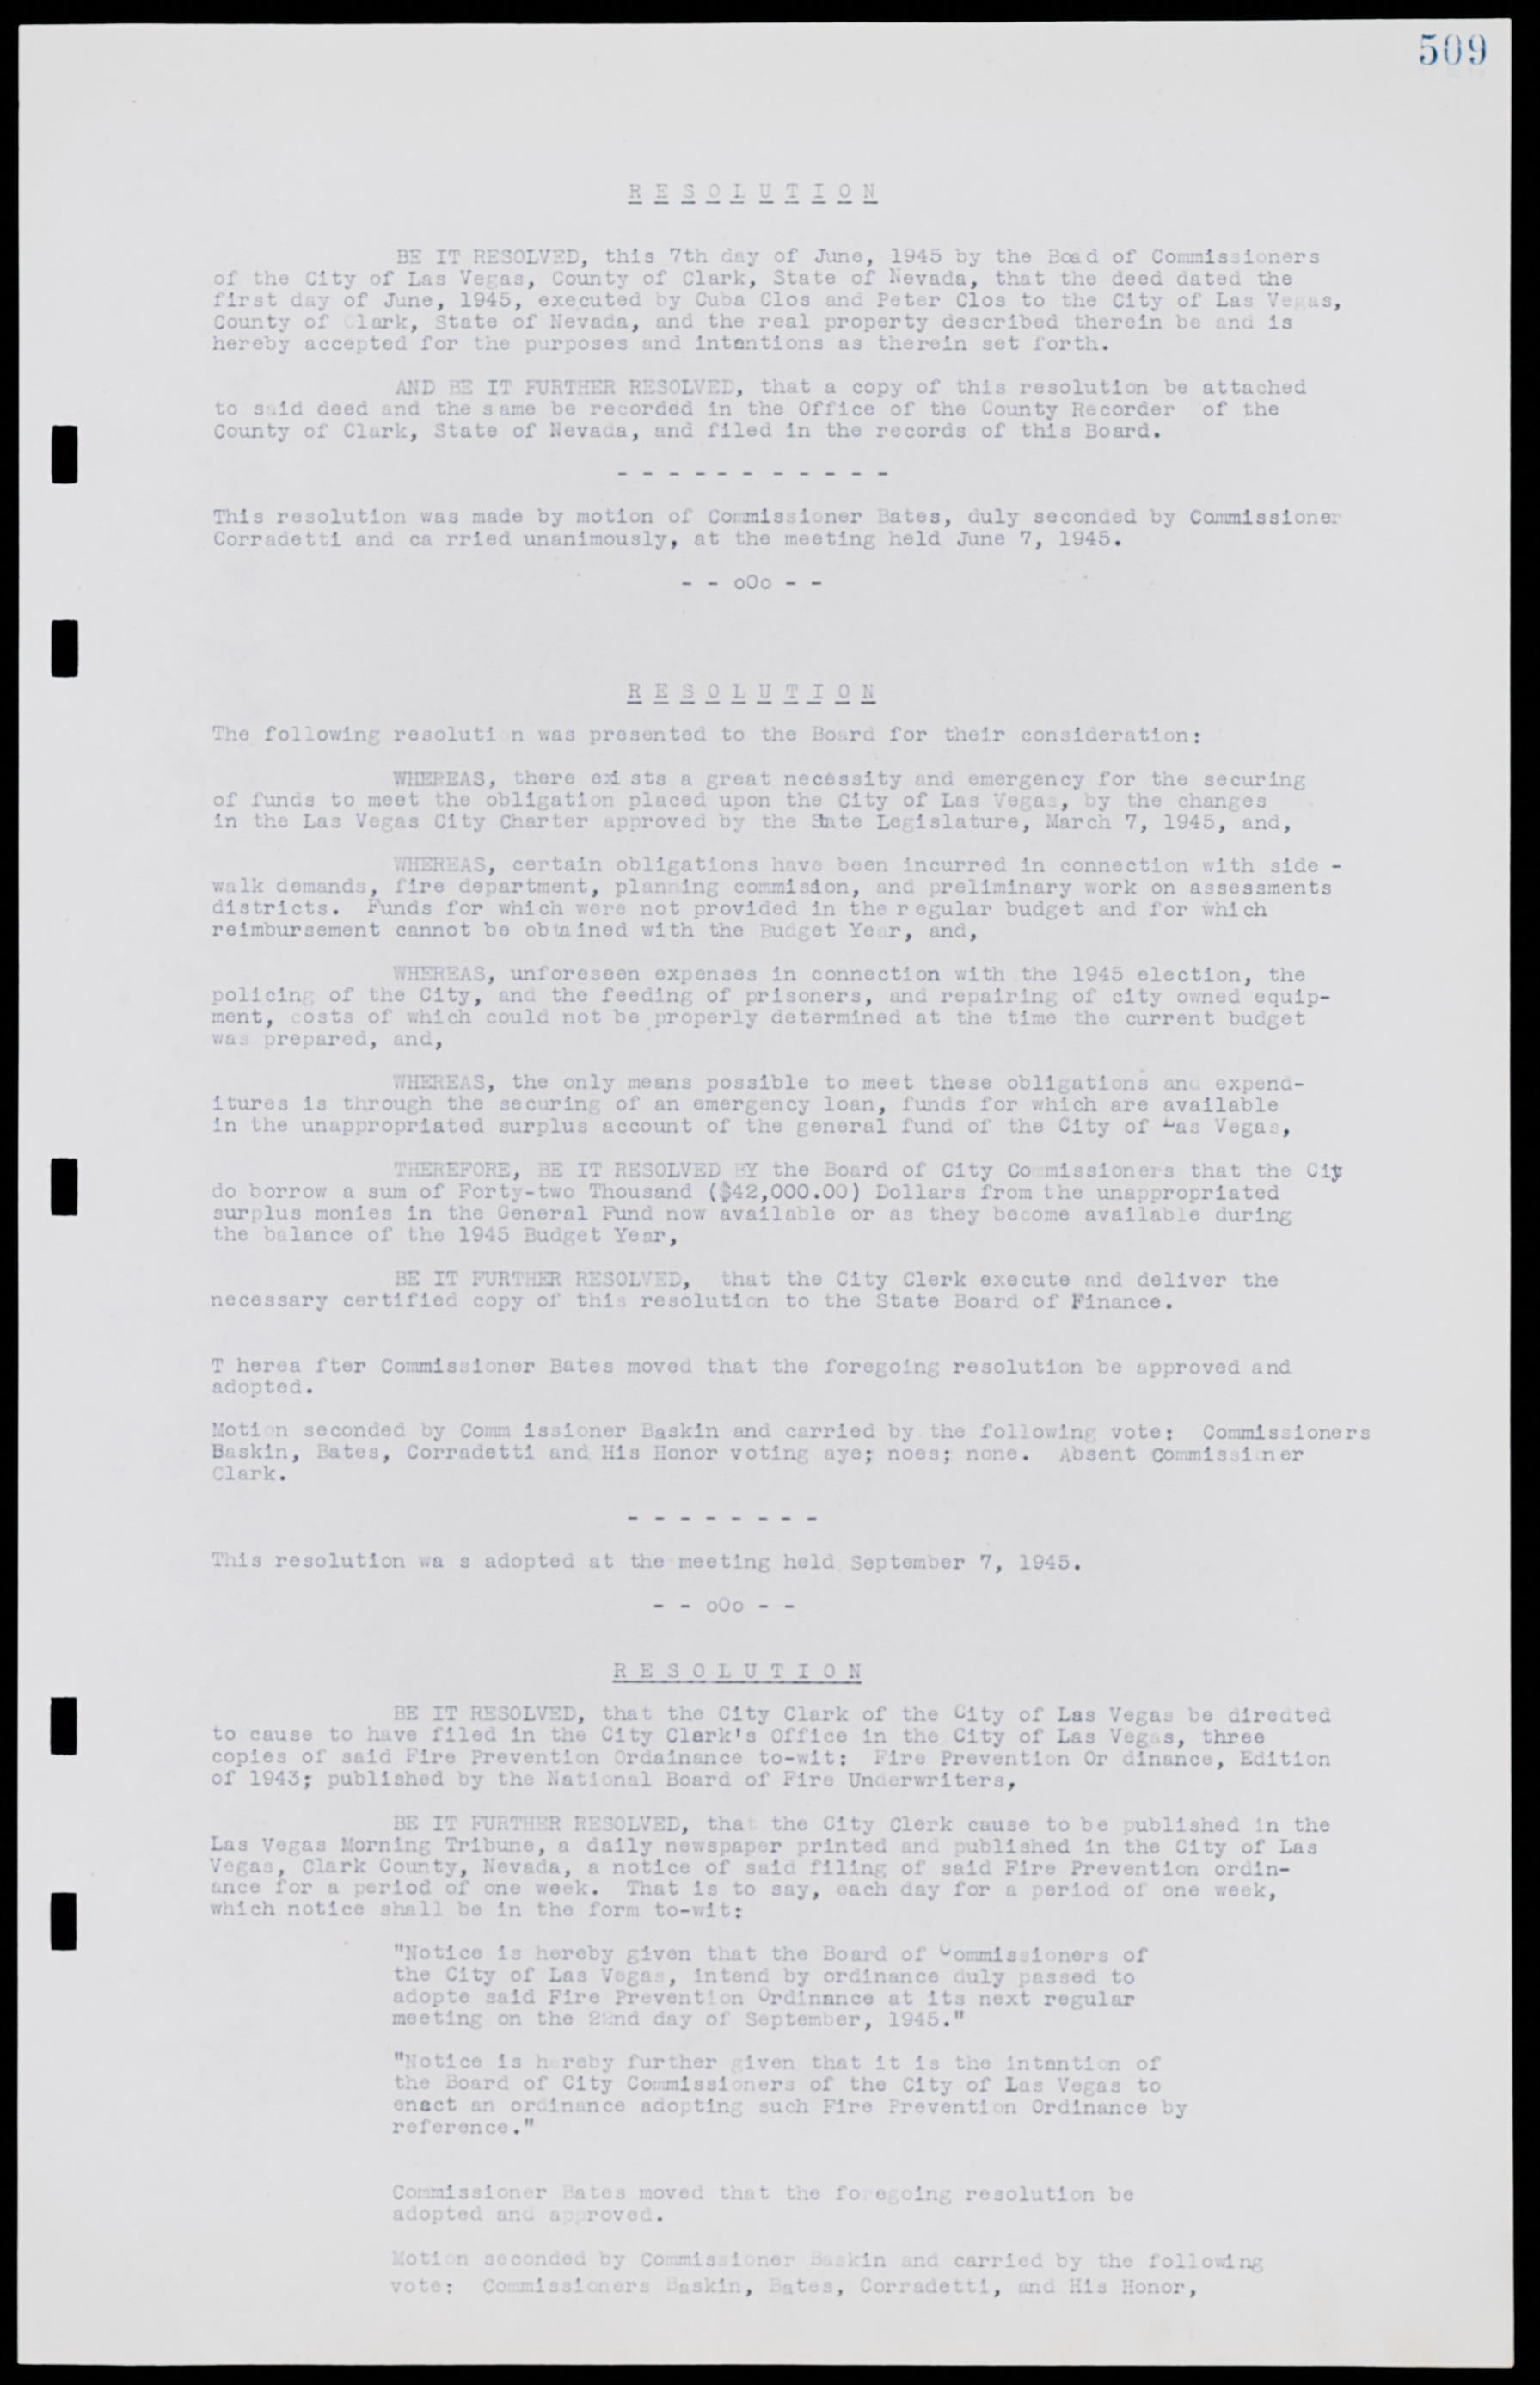 Las Vegas City Commission Minutes, January 7, 1947 to October 26, 1949, lvc000006-539